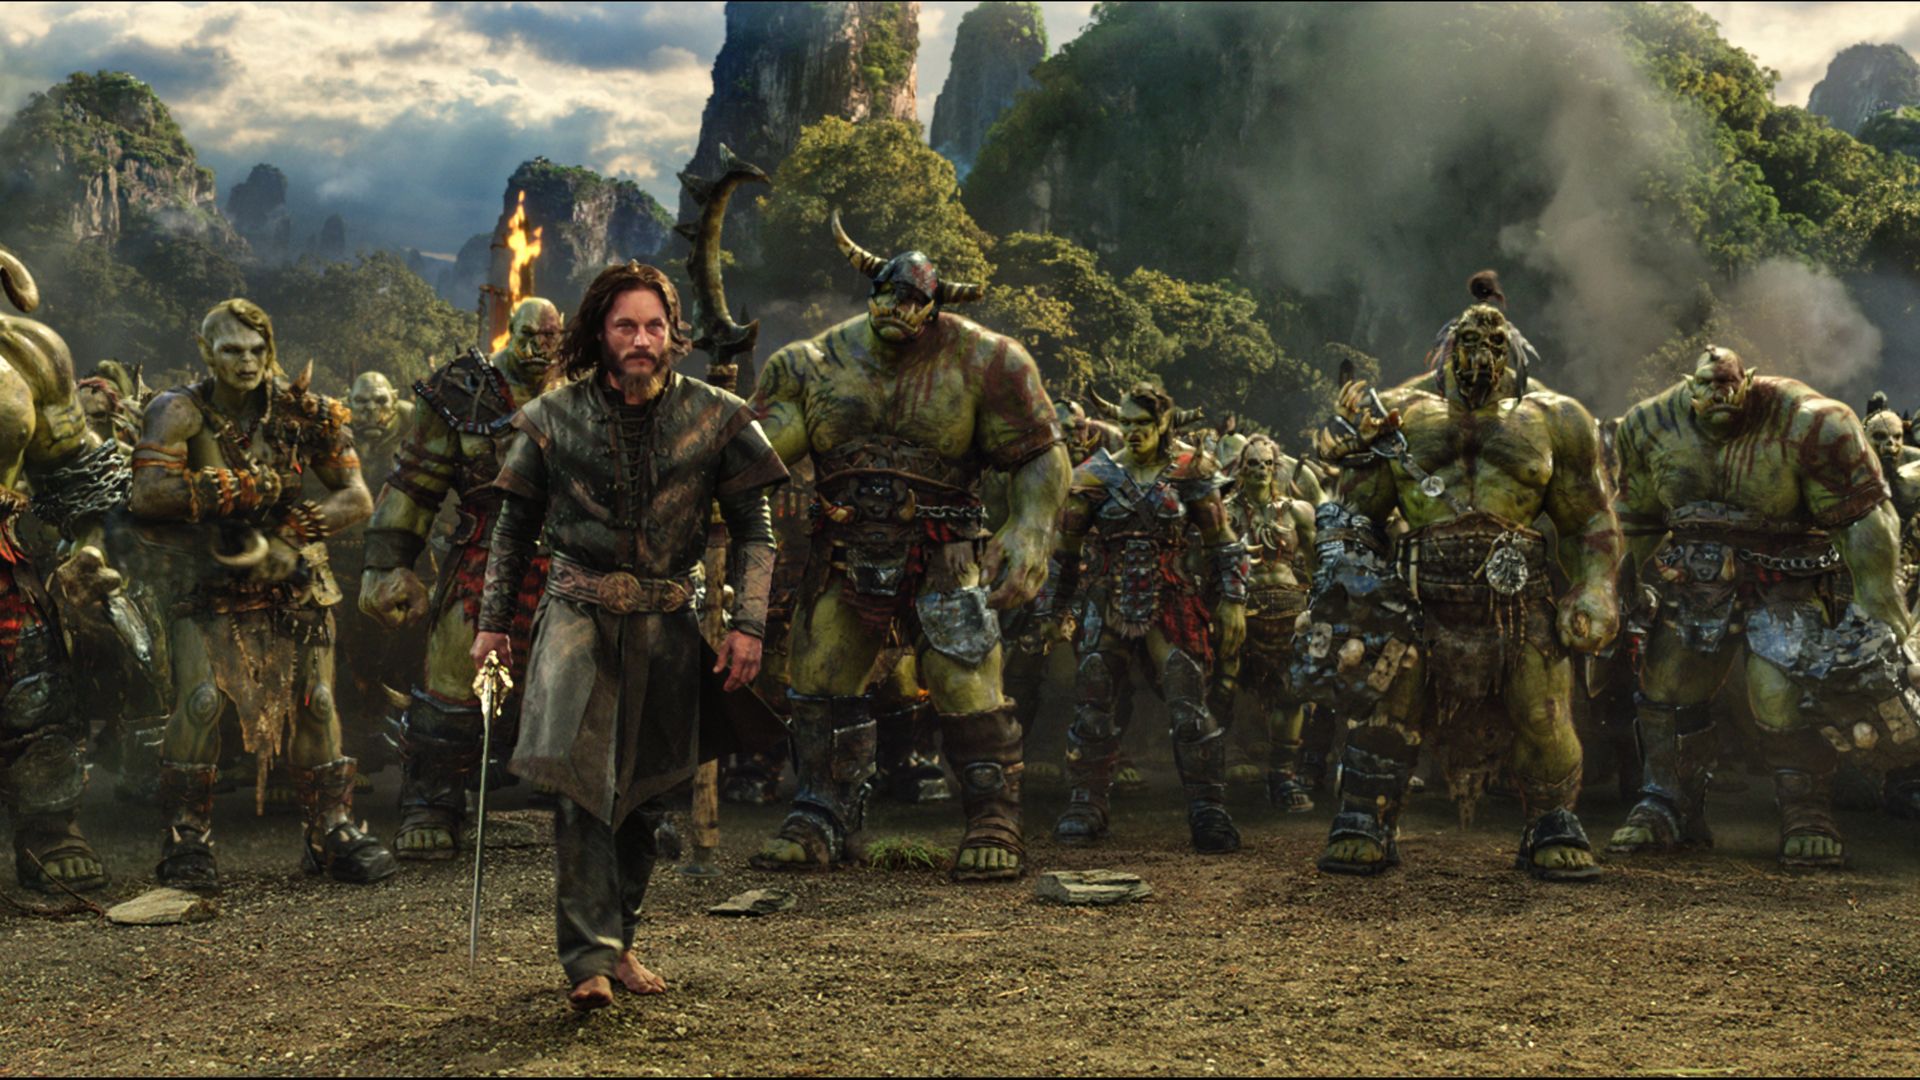 Warcraft, Anduin Lothar, TRAVIS FIMMEL, orks, Best Movies of 2016 (horizontal)